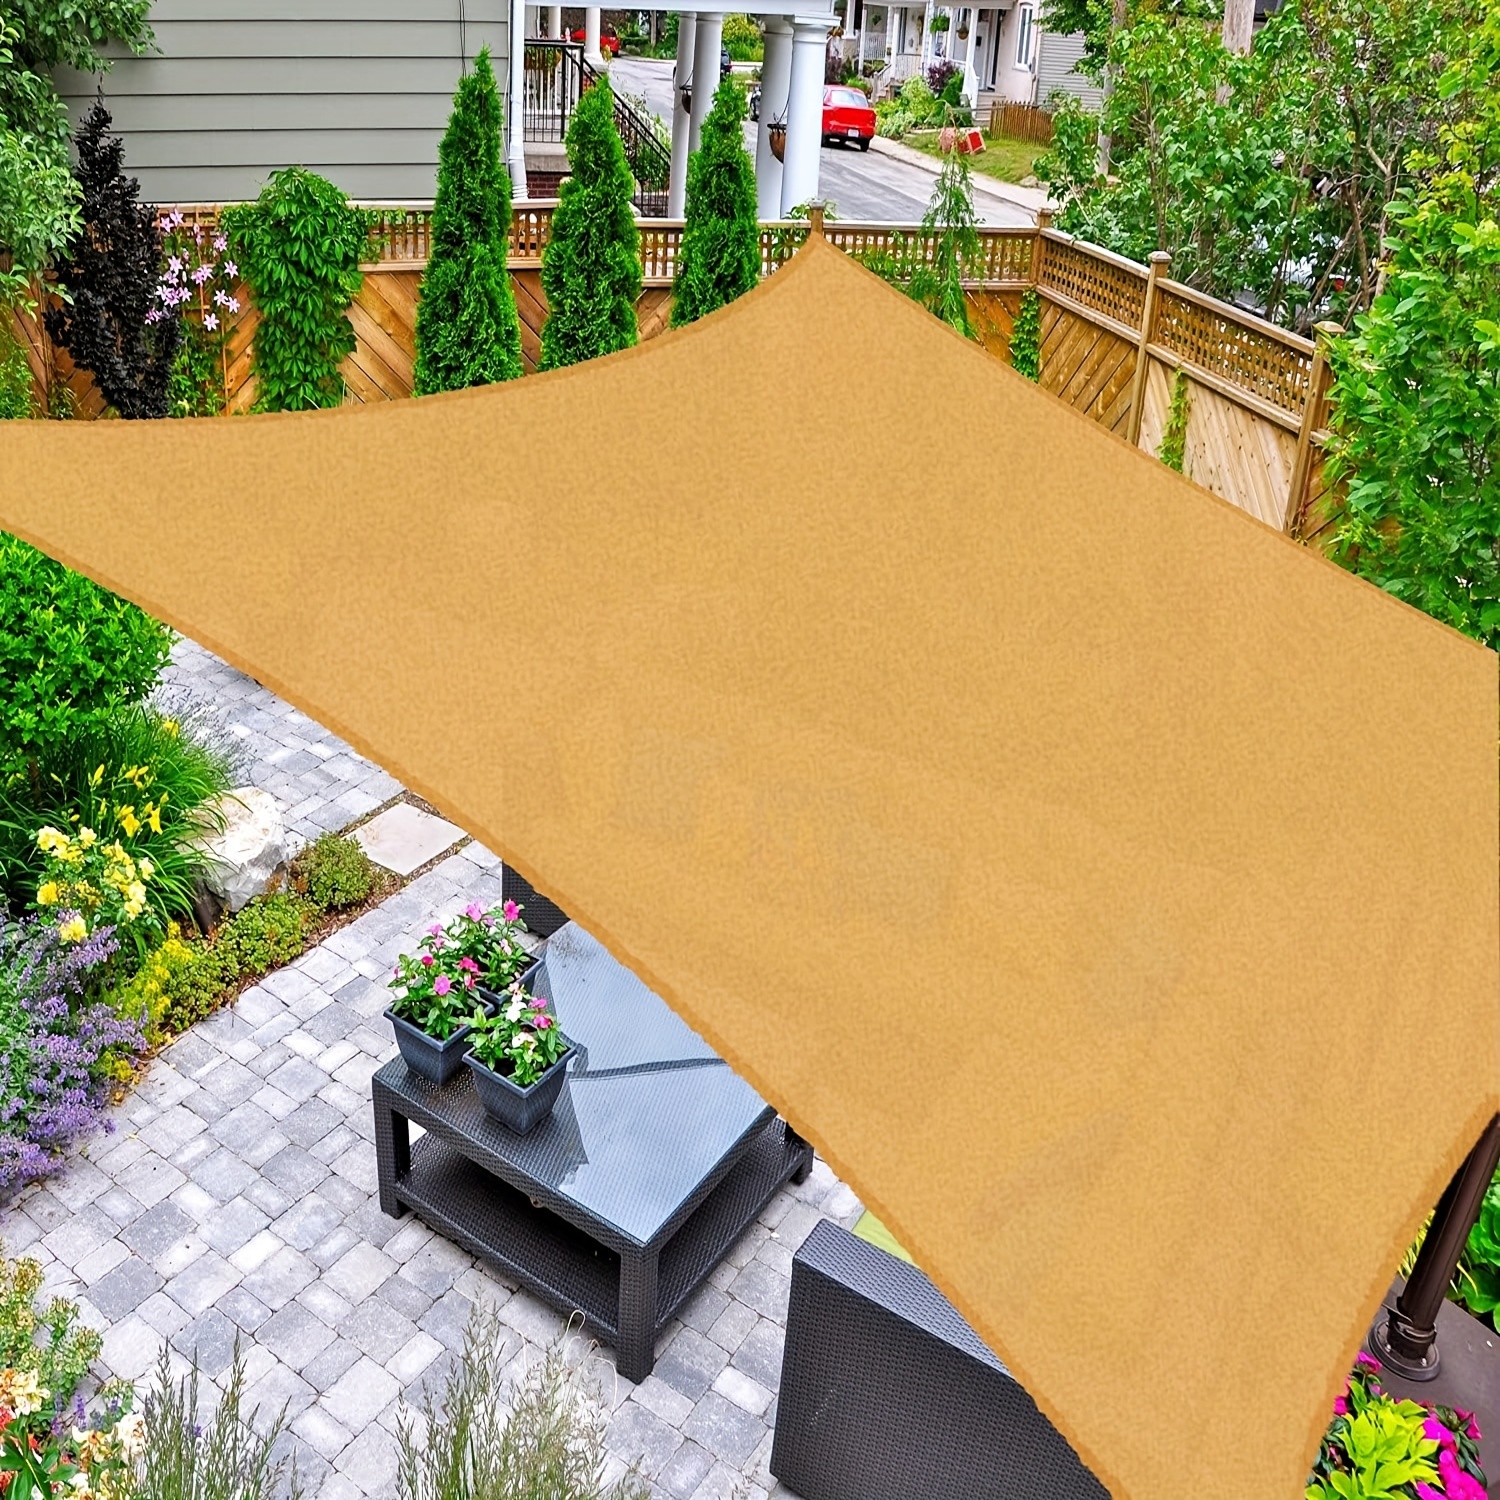 

Sun Shade Rectangle 12' X 16' Uv Block Canopy For Patio Backyard Lawn Garden Outdoor Activities, Sand